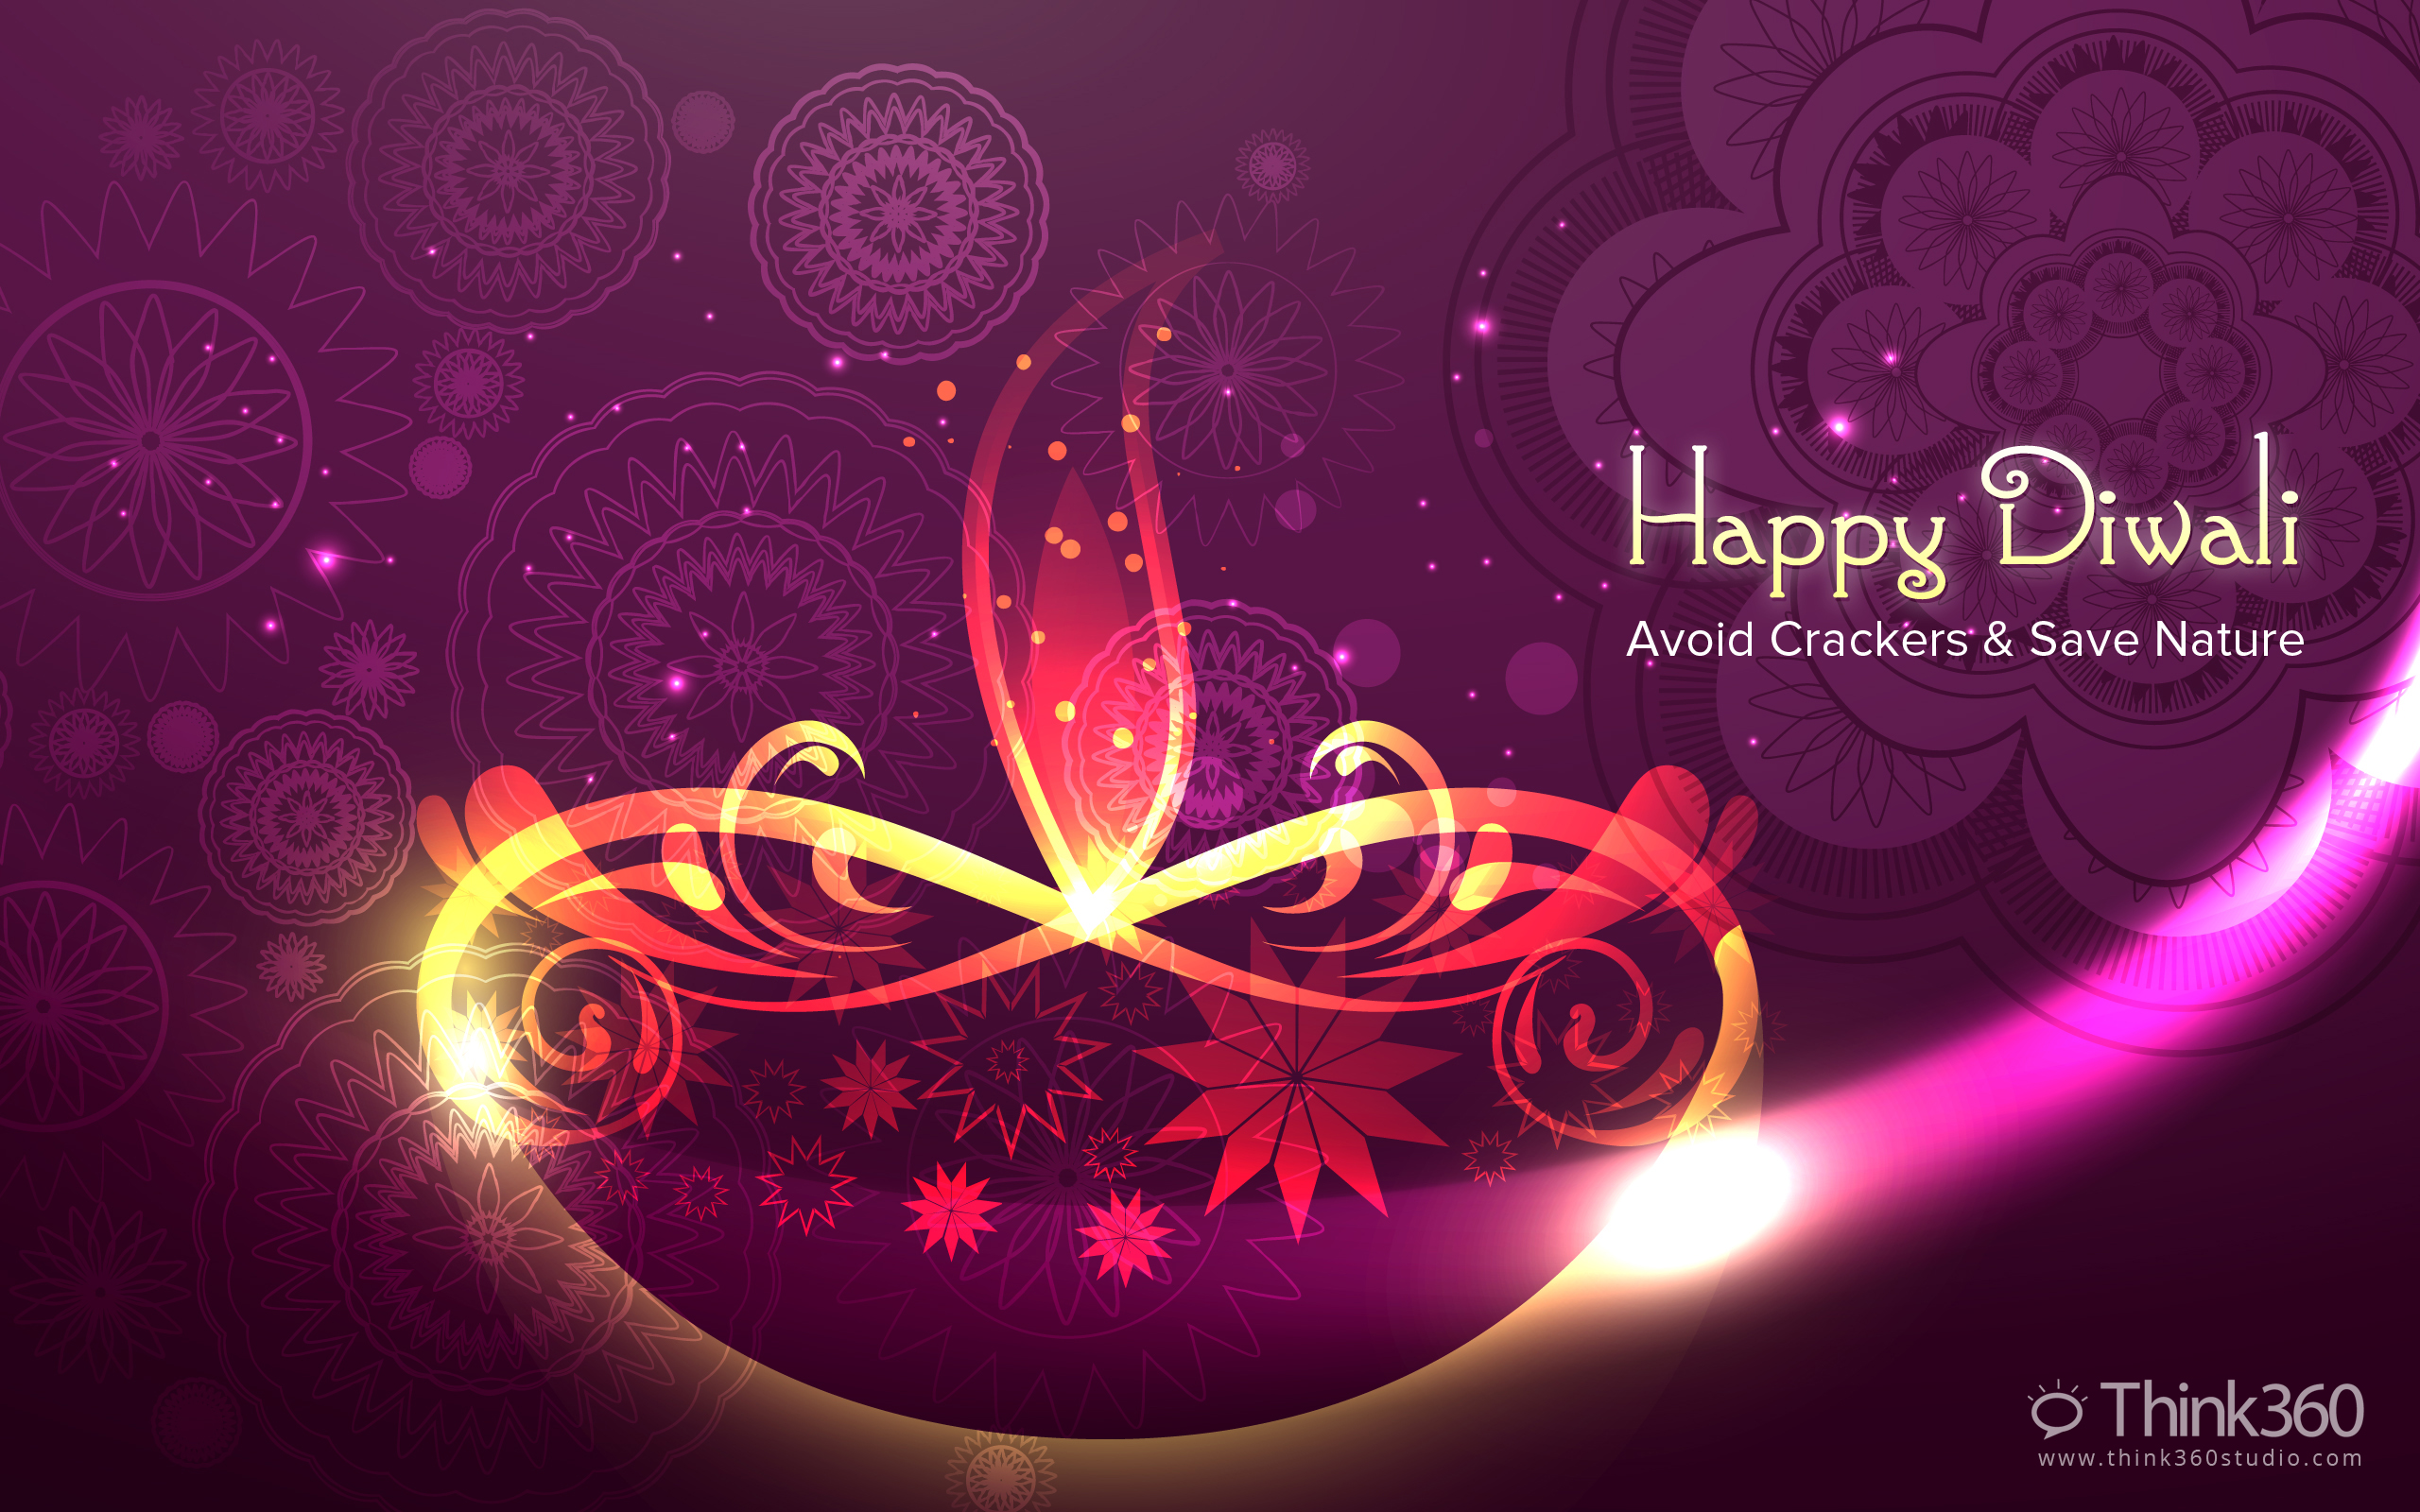 Happy Diwali Wallpaper – Think 360 Studio